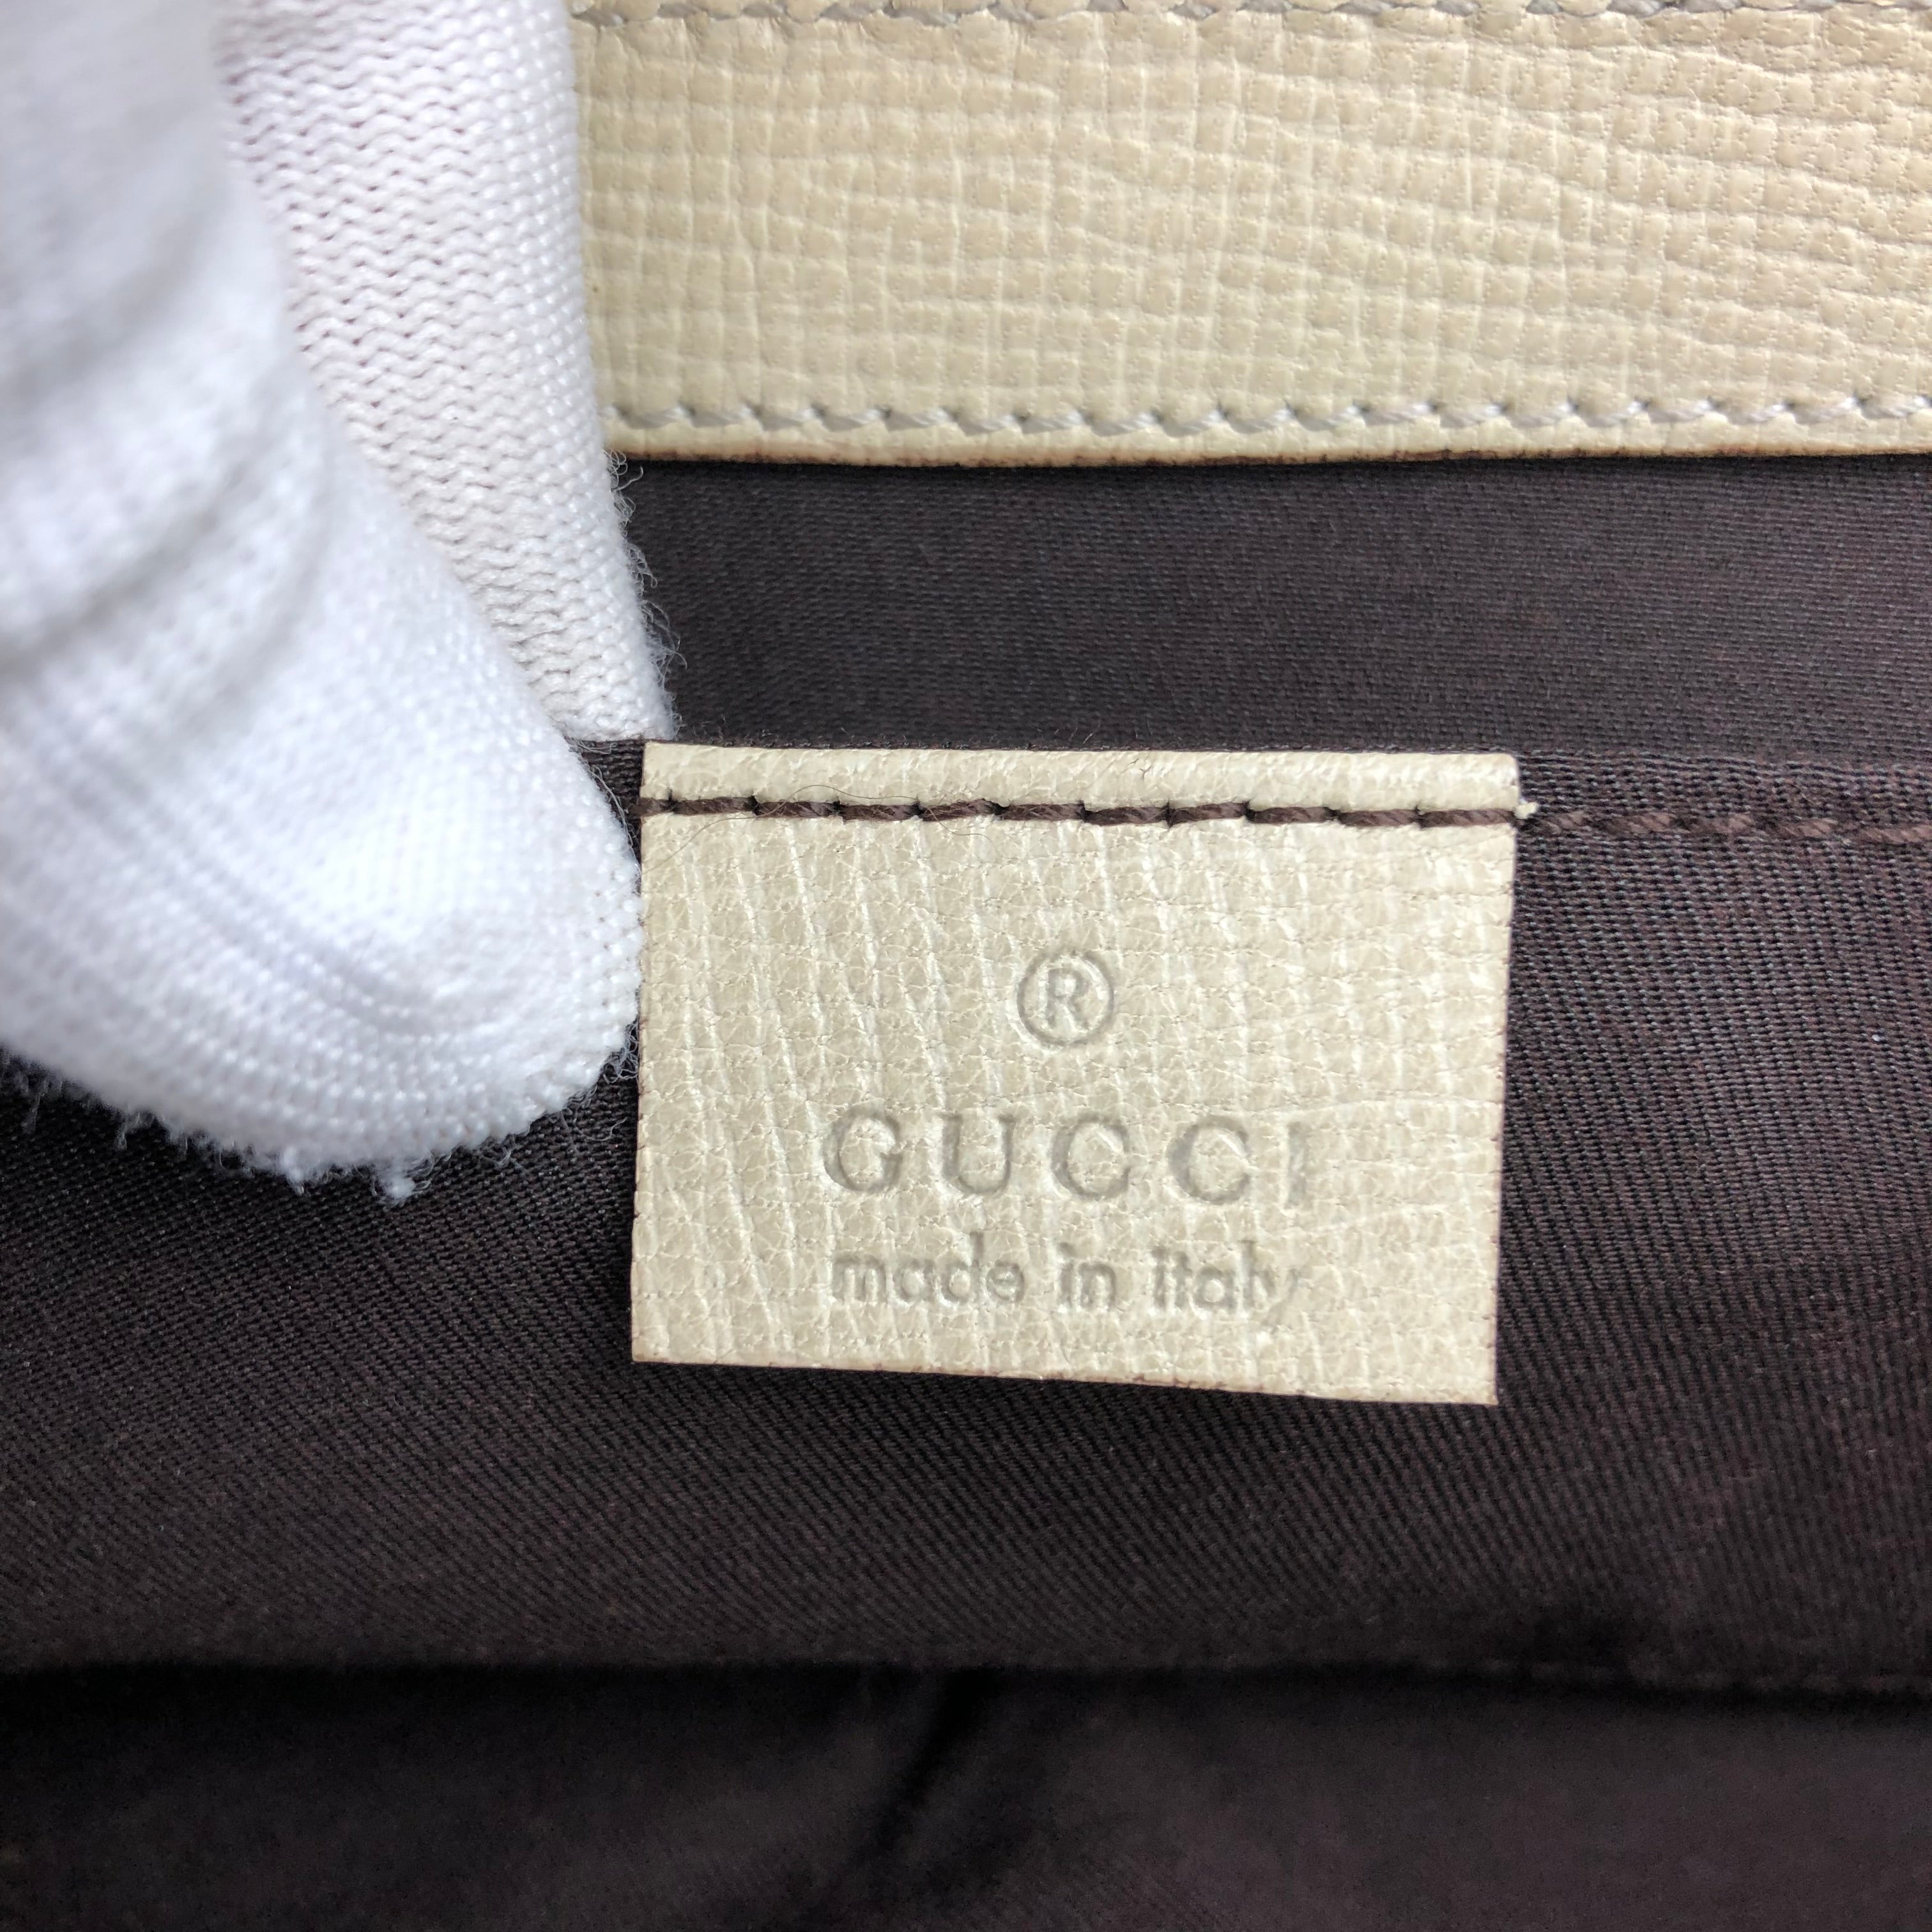 Gucci Horsebit Tom Ford Chain Leather Shoulder Bag